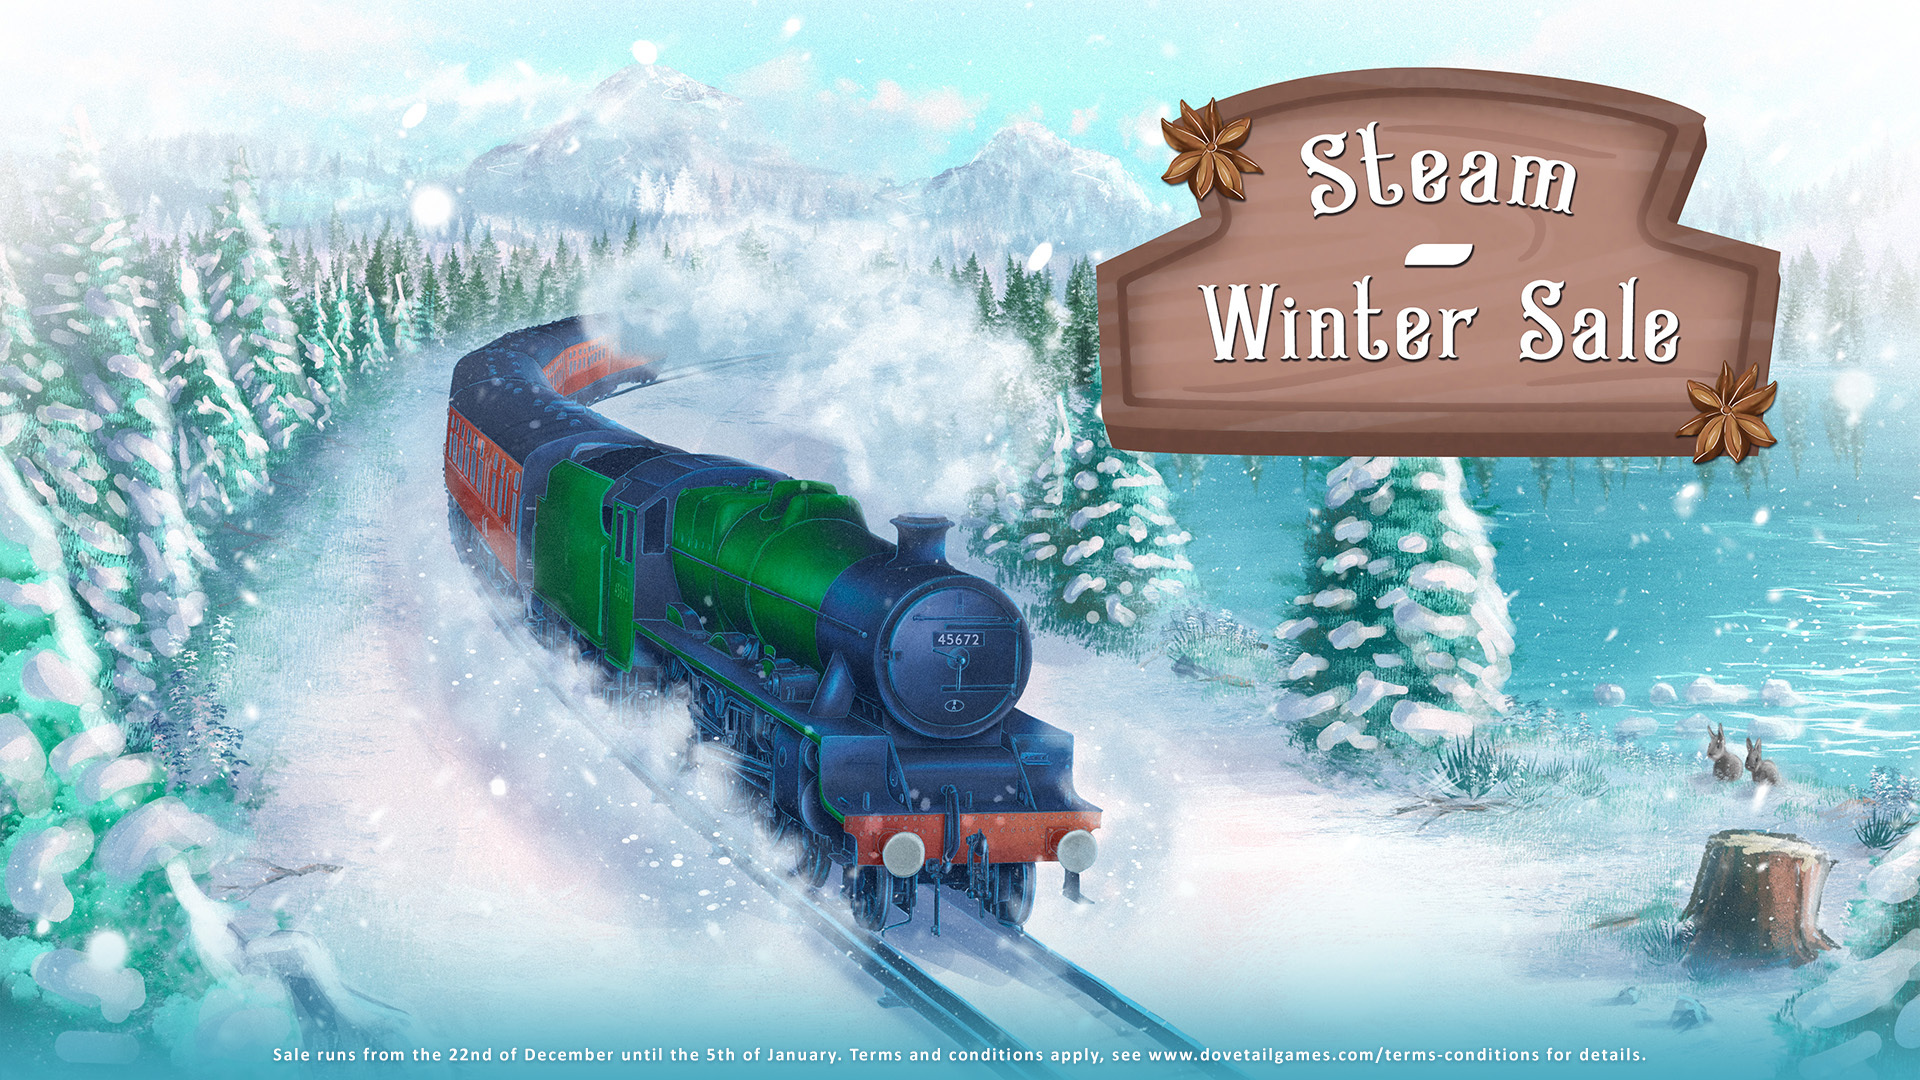 Steam Winter Sale Now Live!